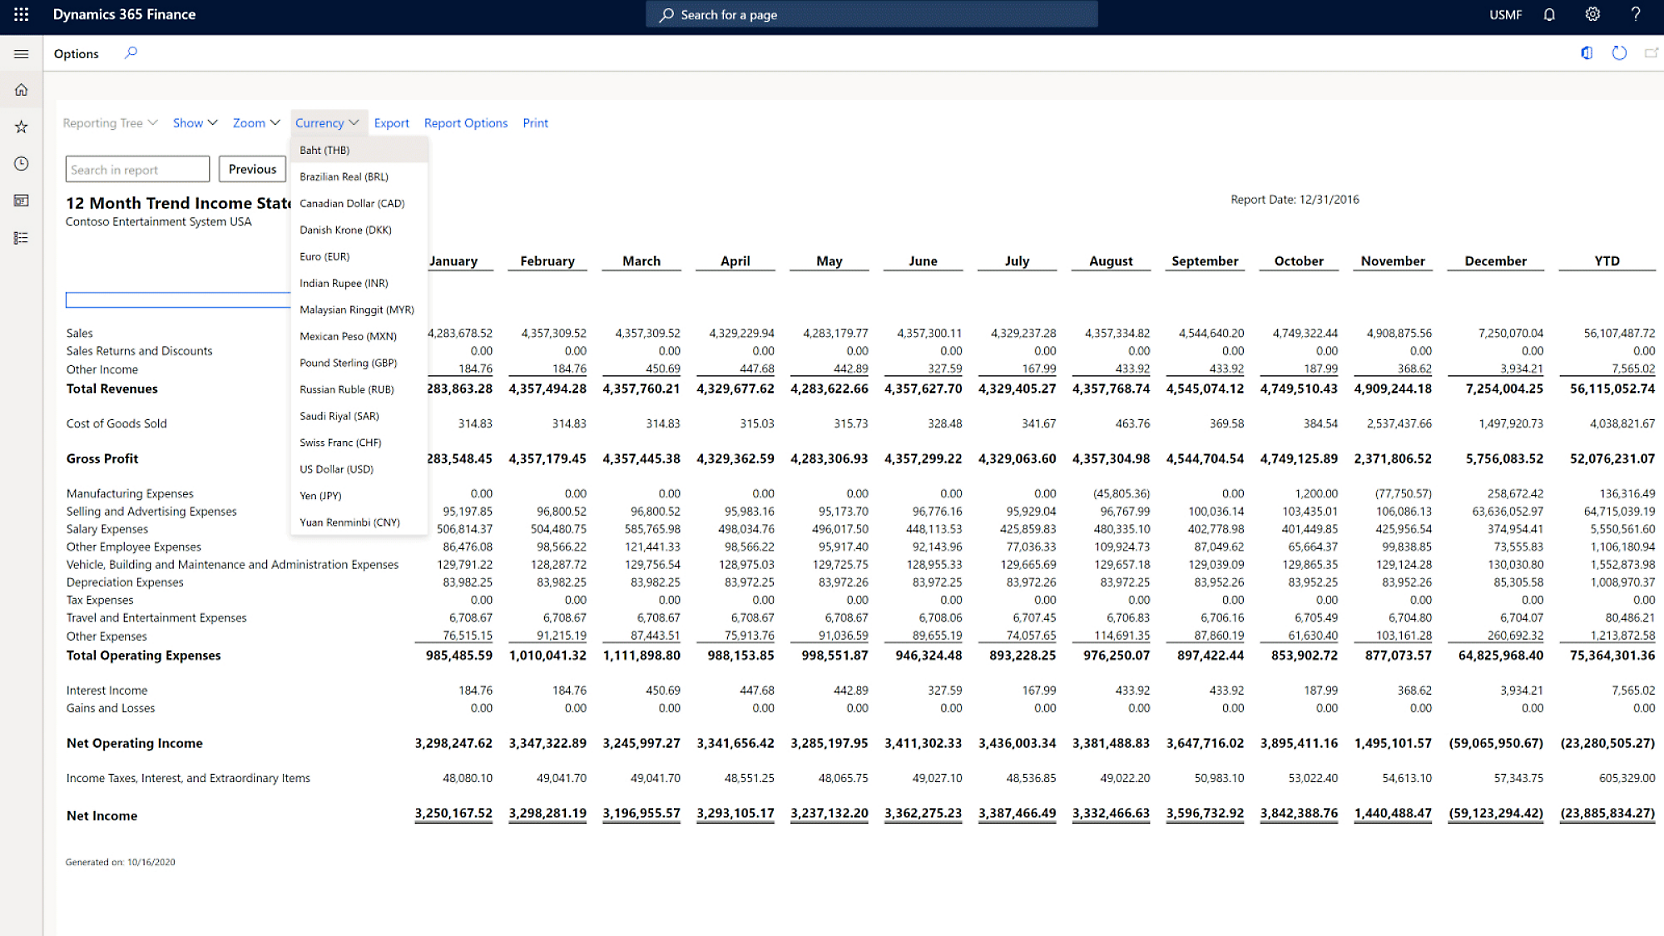 A screen shot of a financial dashboard in Microsoft power bi.